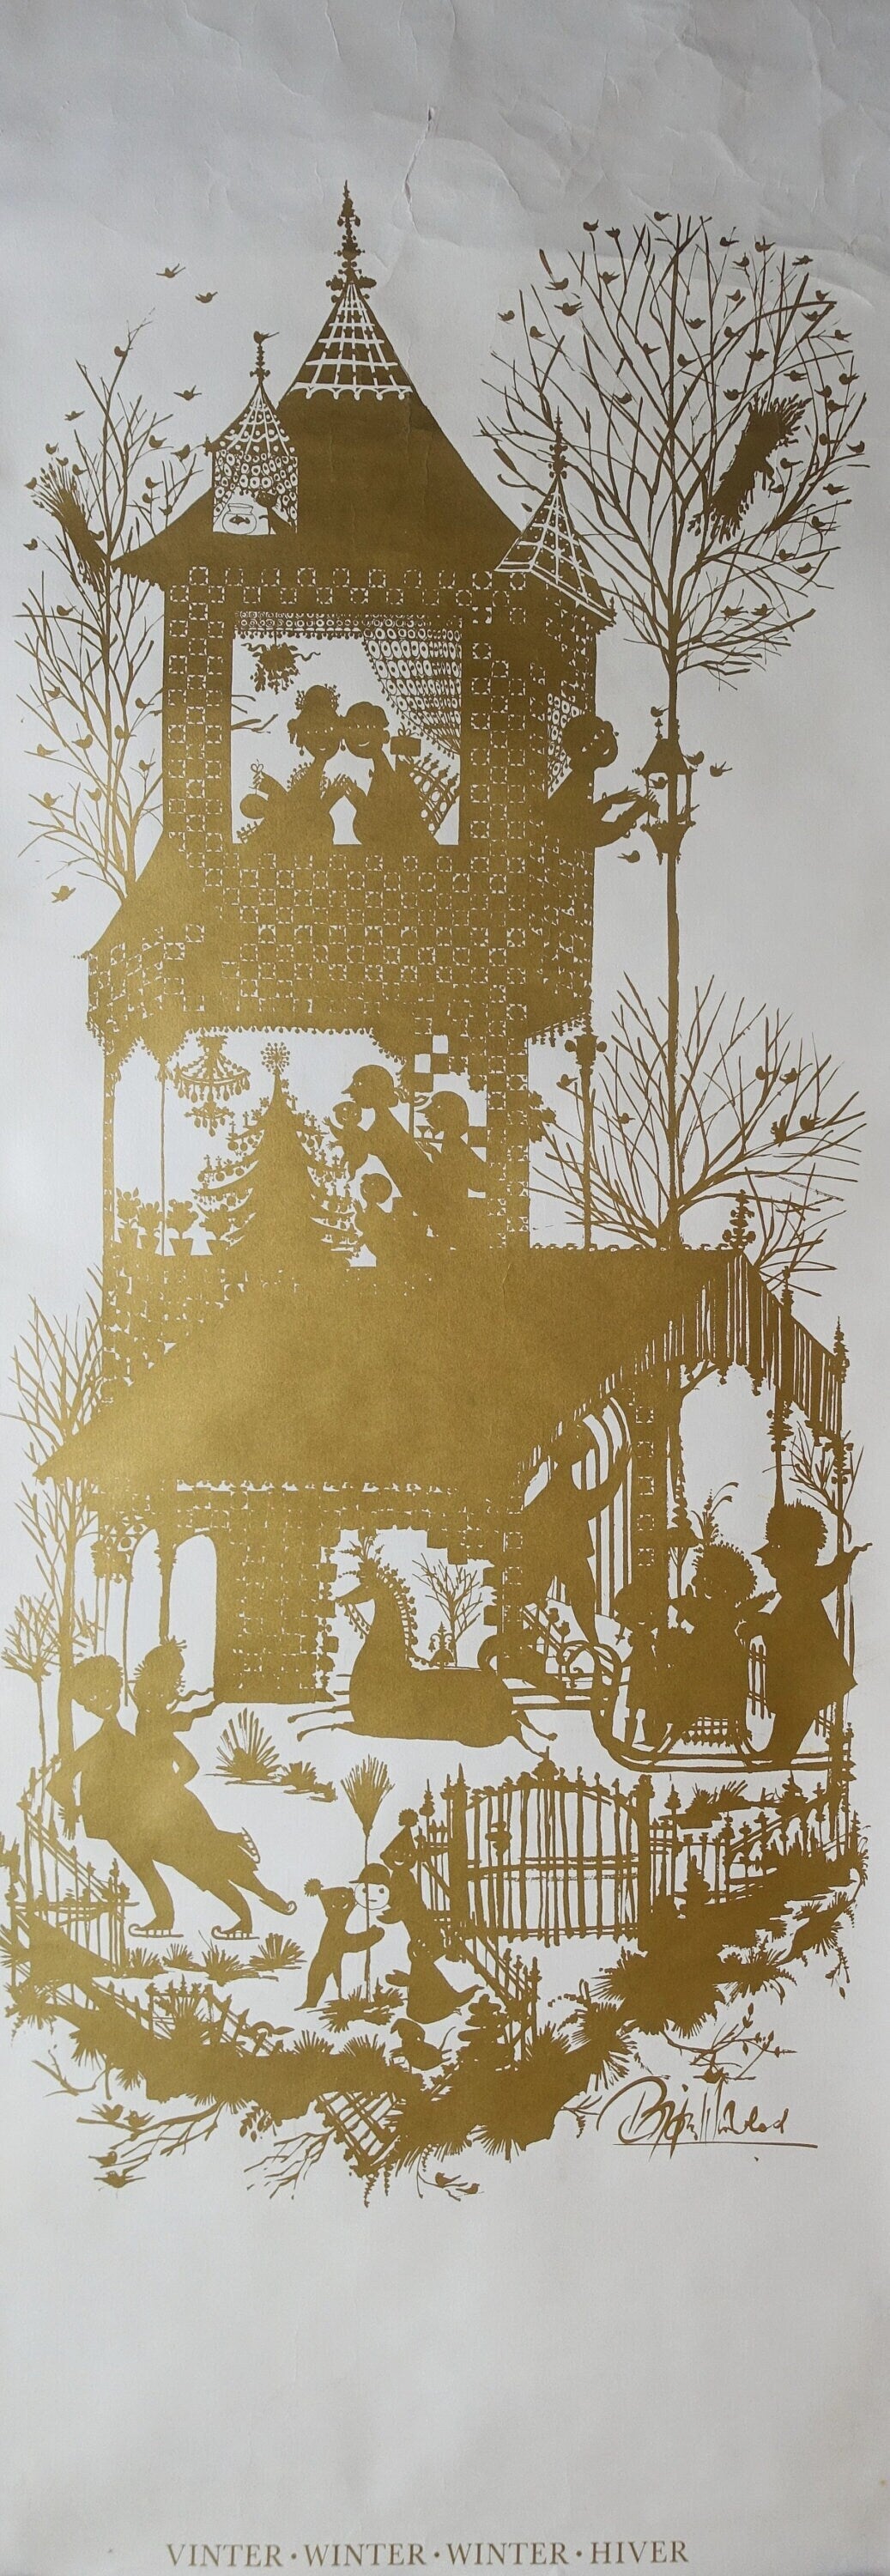 1970s Winter Season by Wiinblad (Golden Version) - Original Vintage Poster